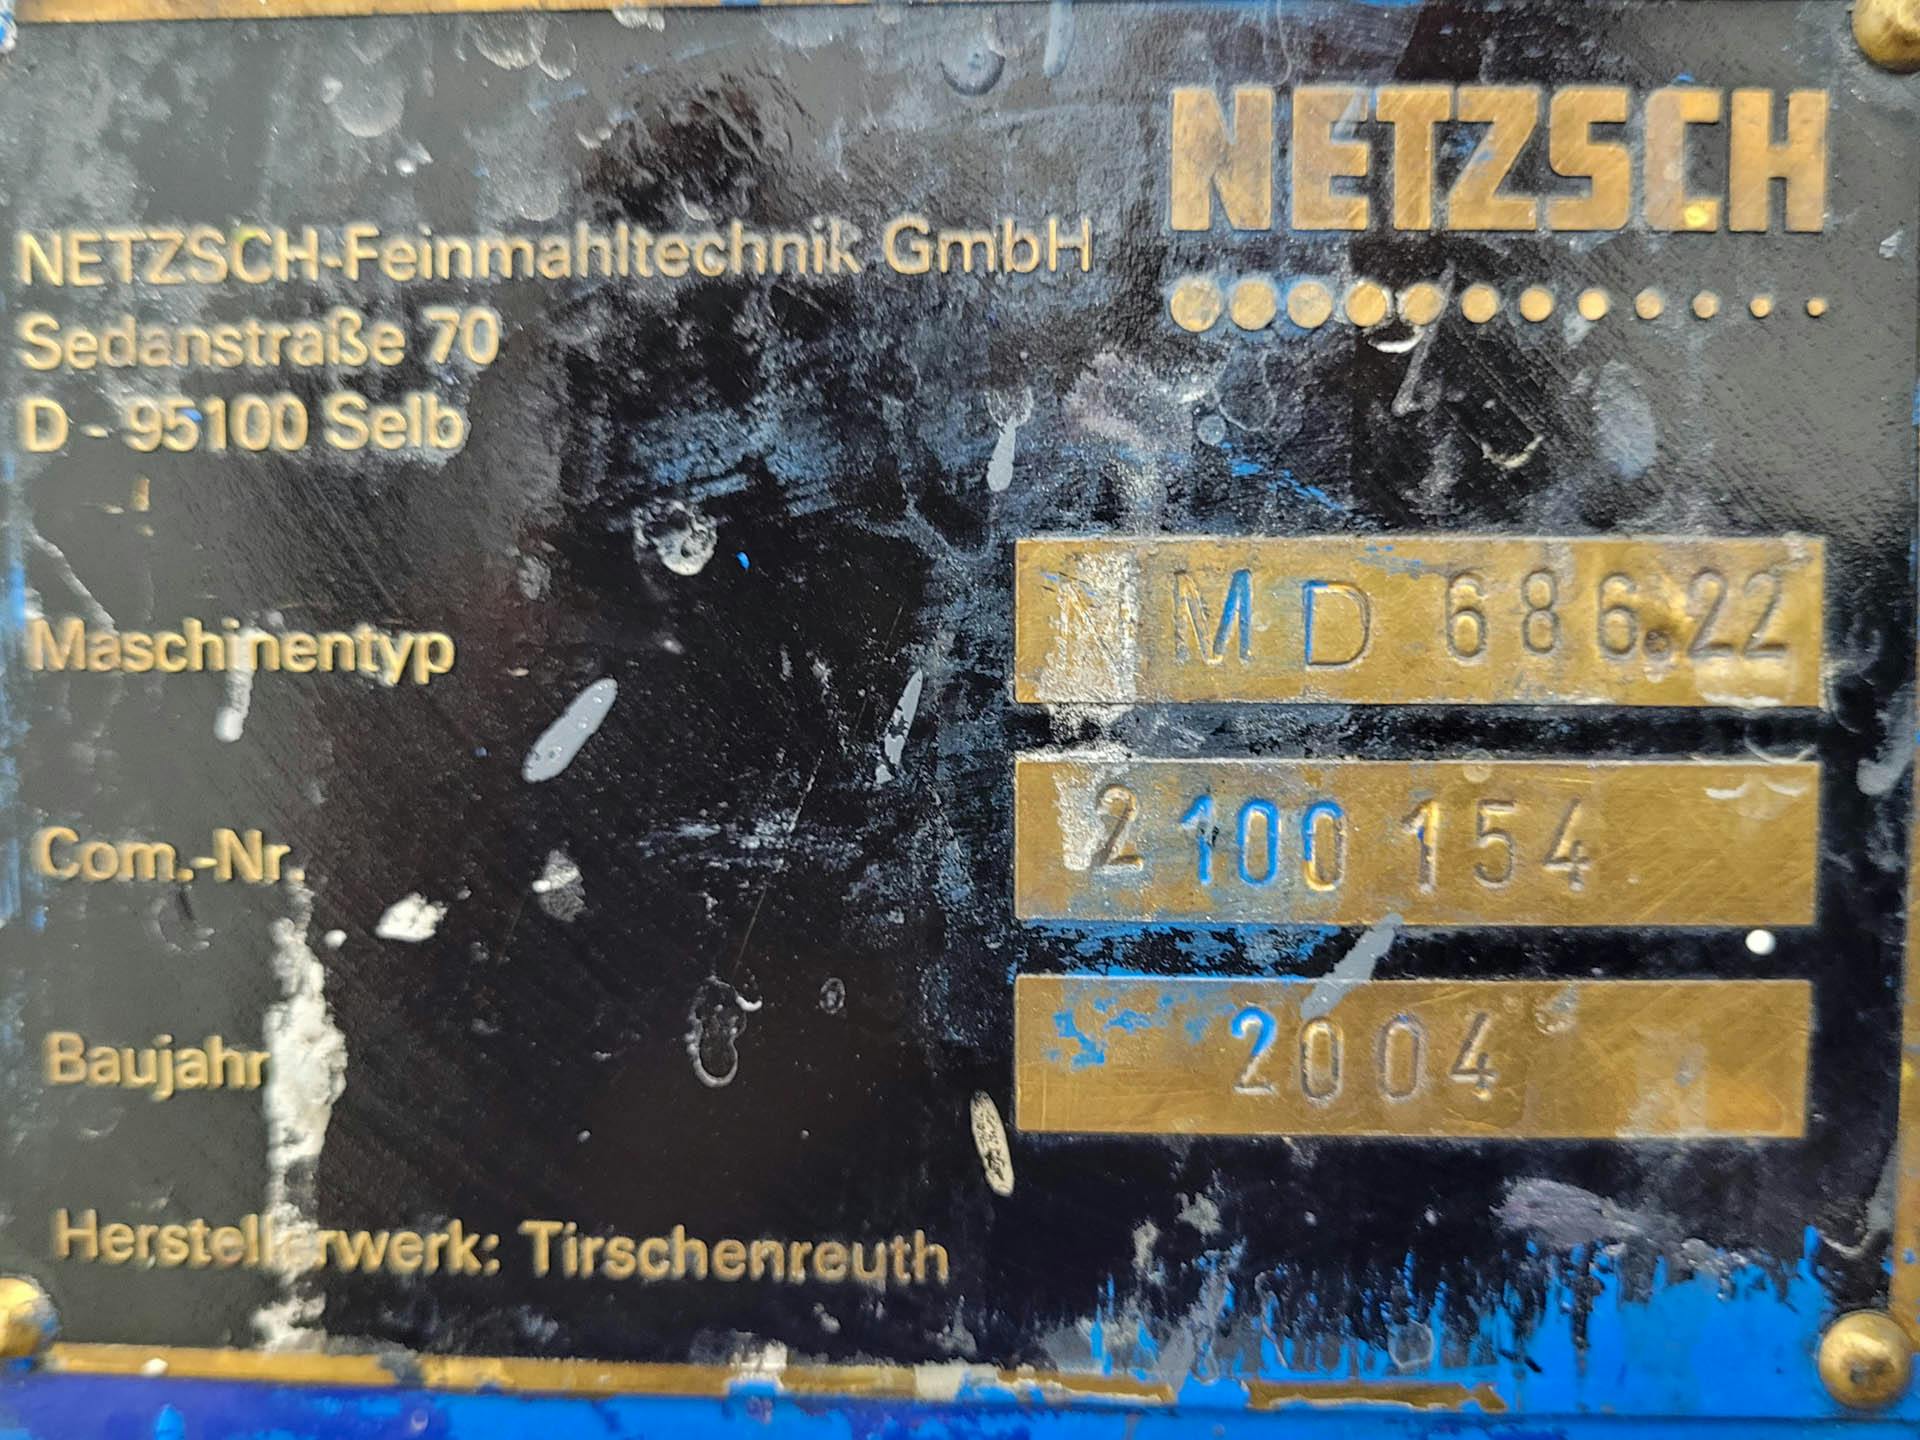 Netzsch NMD 686 22 - Dispersor - image 8